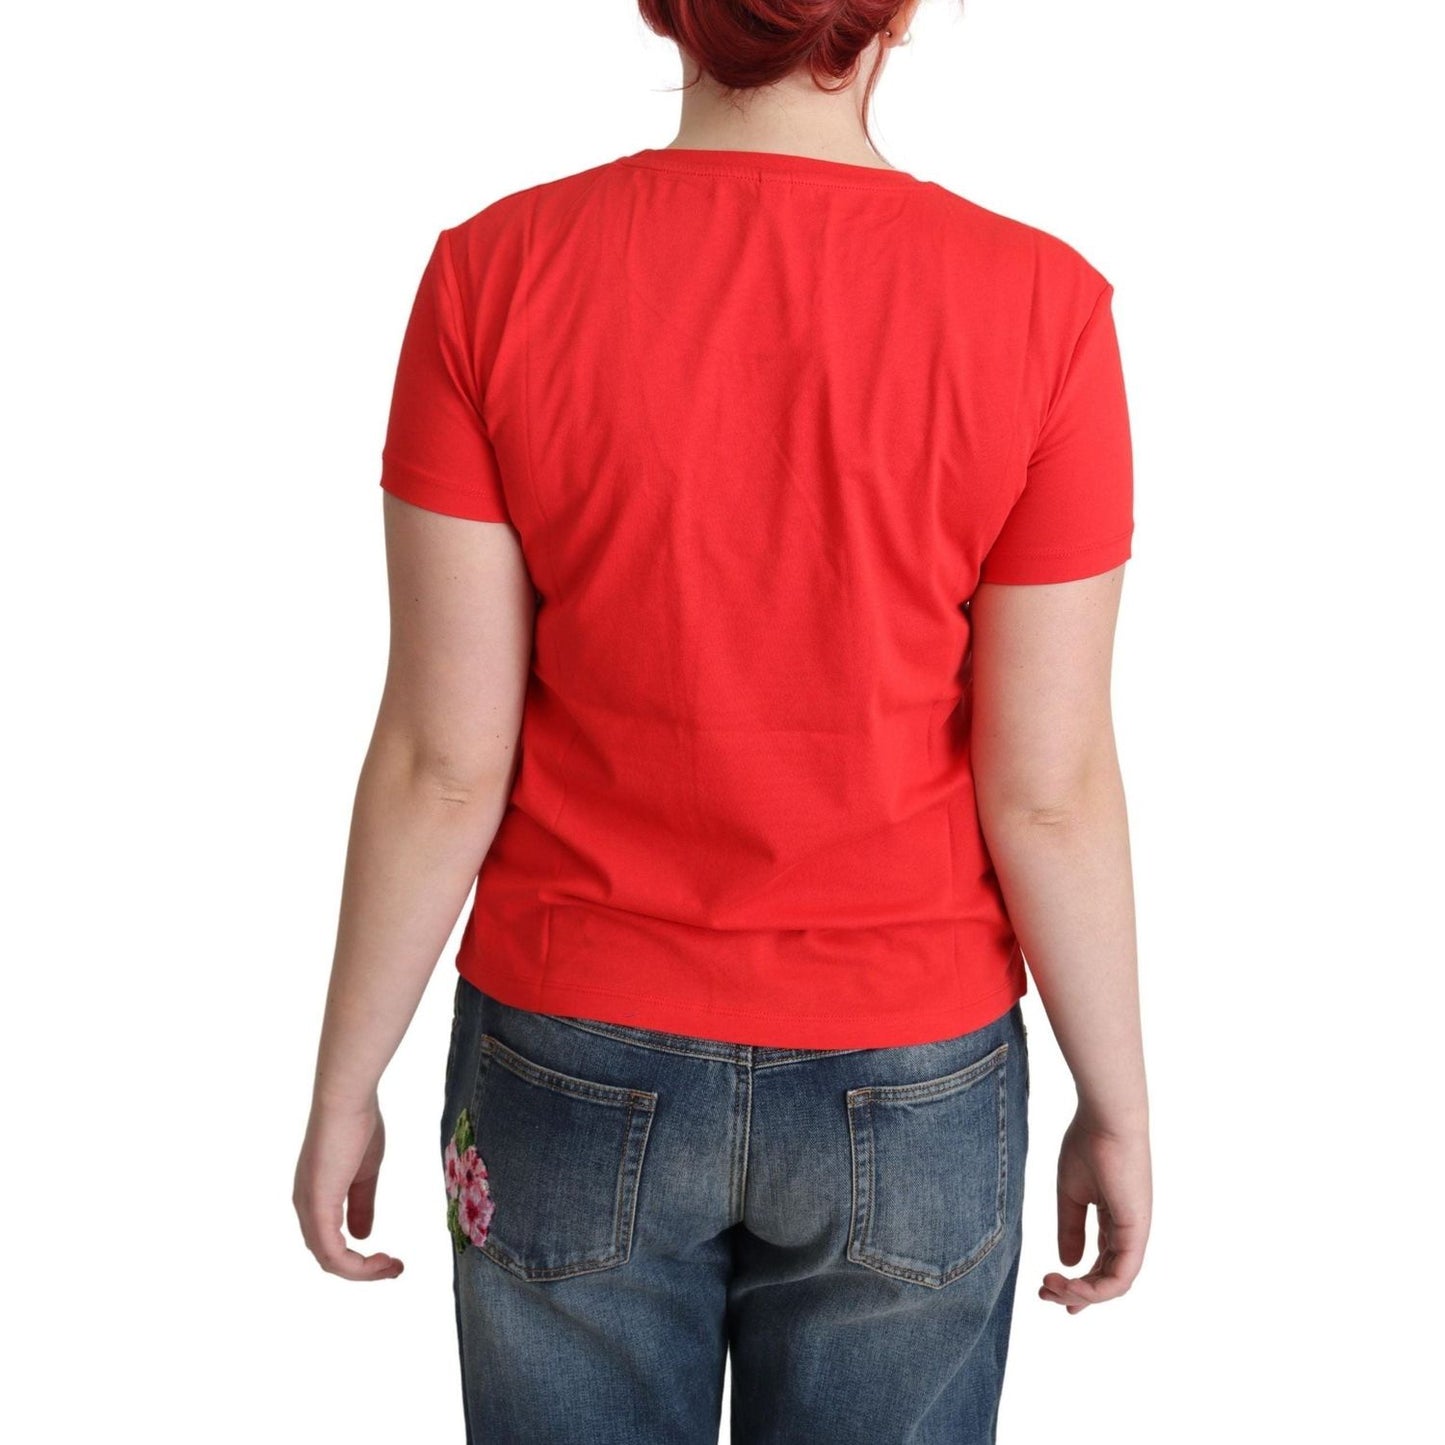 Moschino Chic Red Graphic Cotton Tee red-cotton-swim-graphic-triangle-print-t-shirt